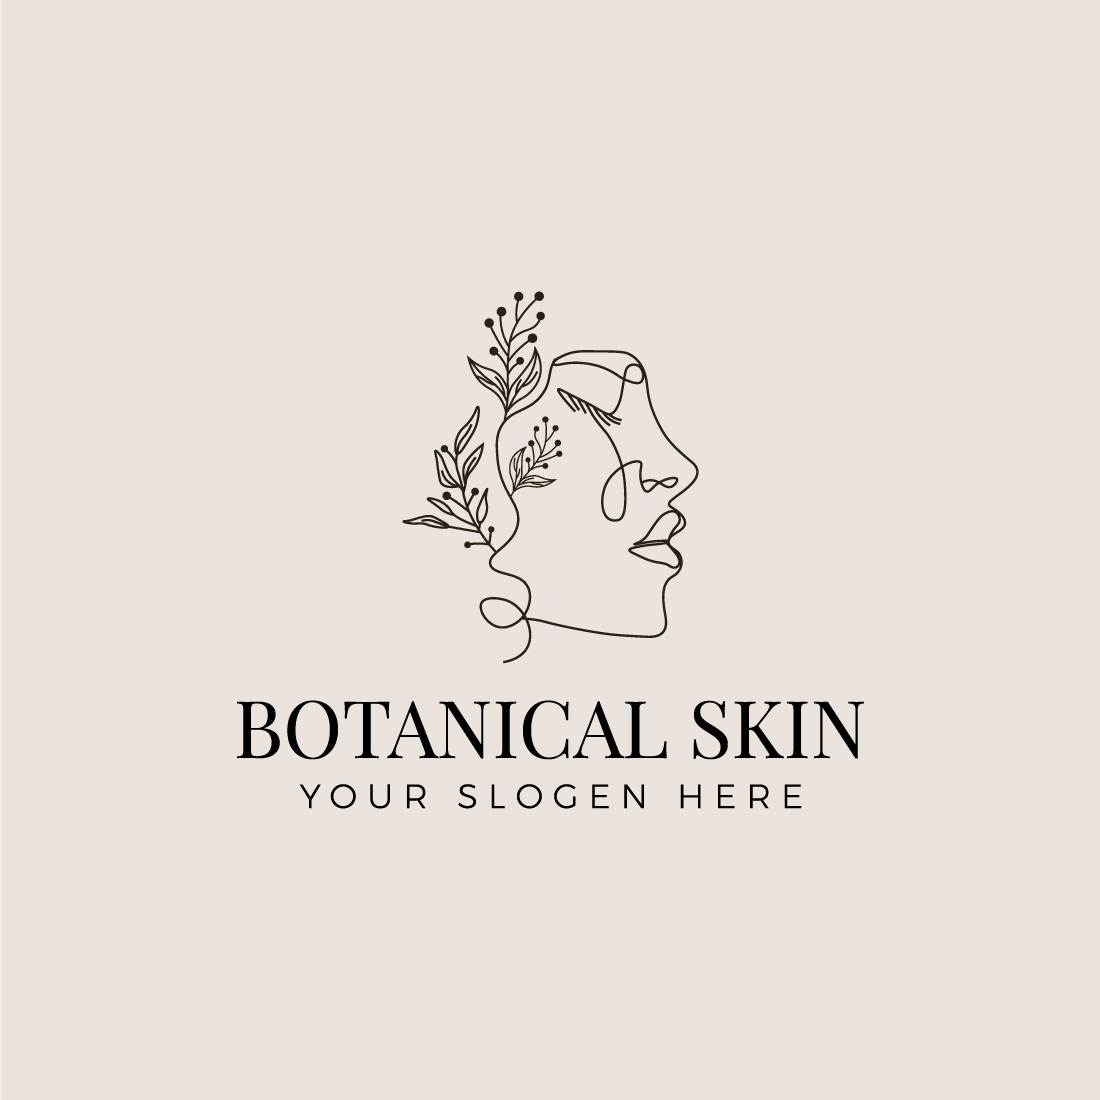 Botanical skin care logo | Hand drawn Line art logo cover image.